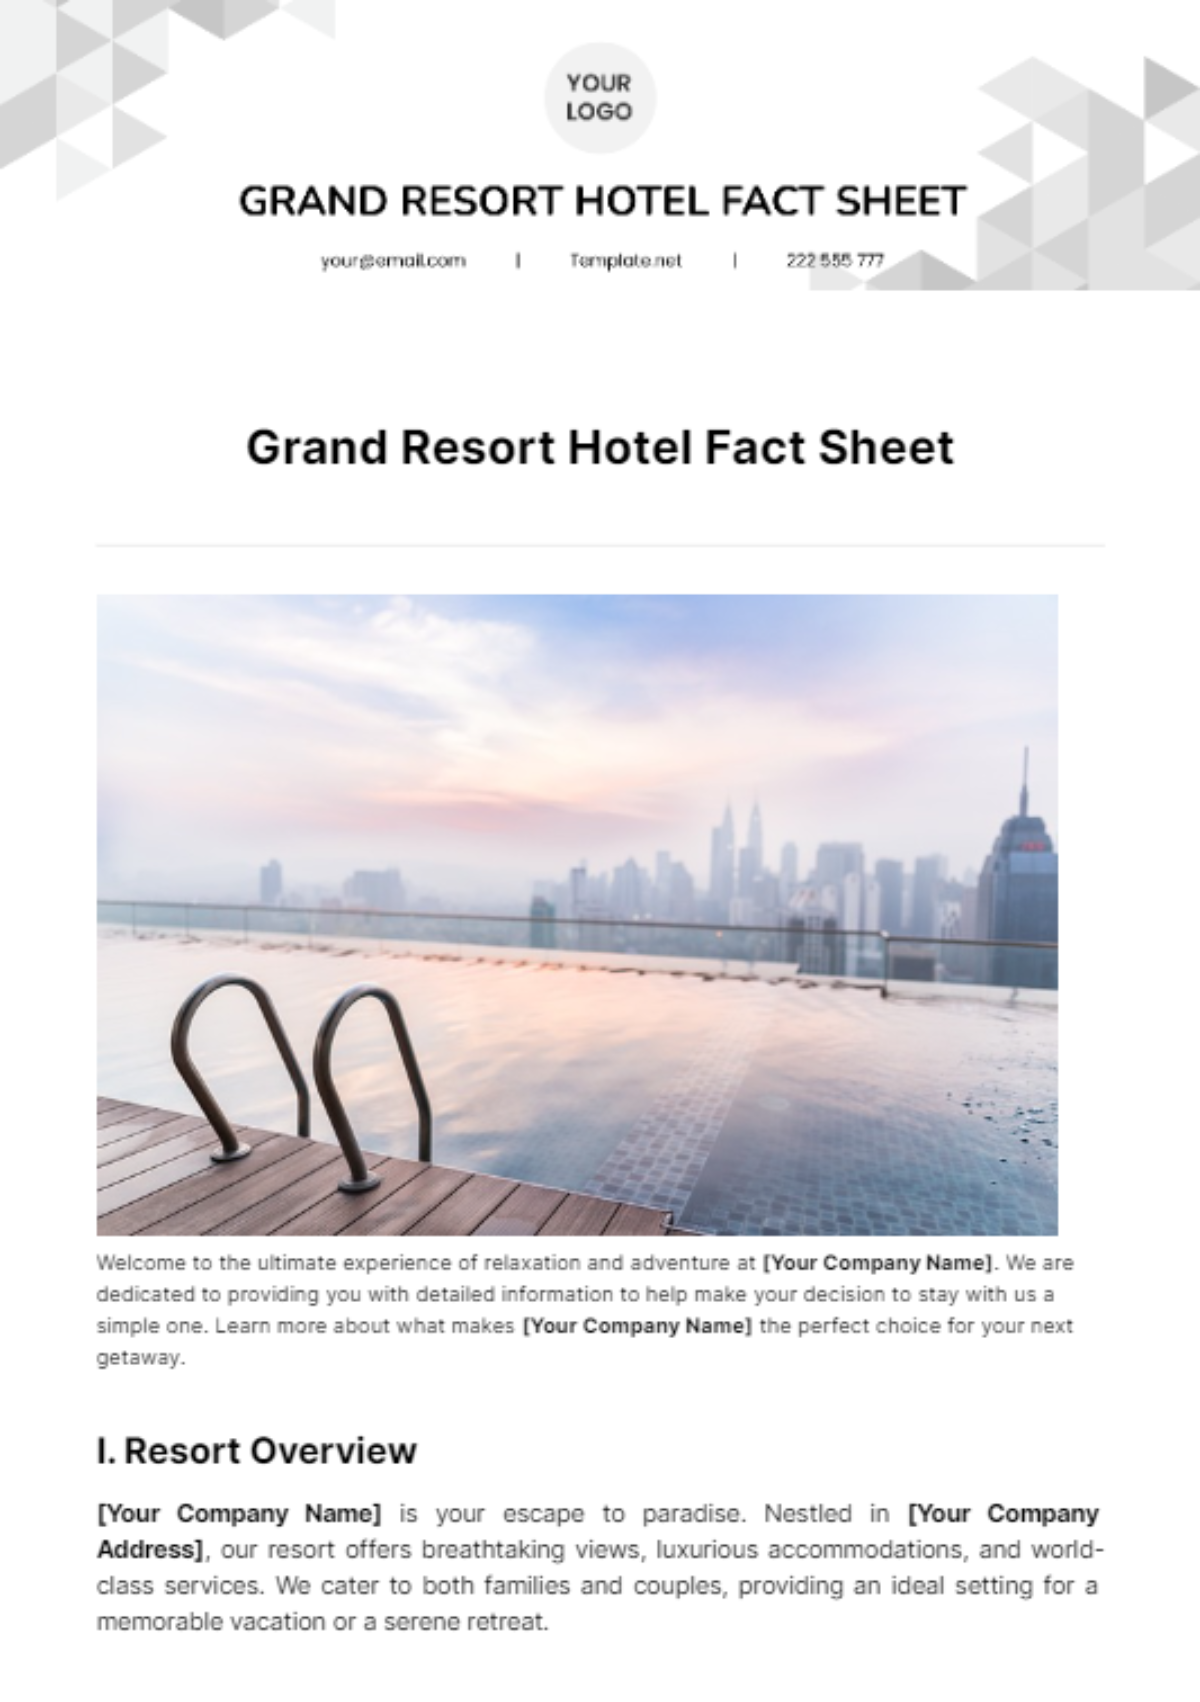 Free Grand Resort Hotel Fact Sheet Template